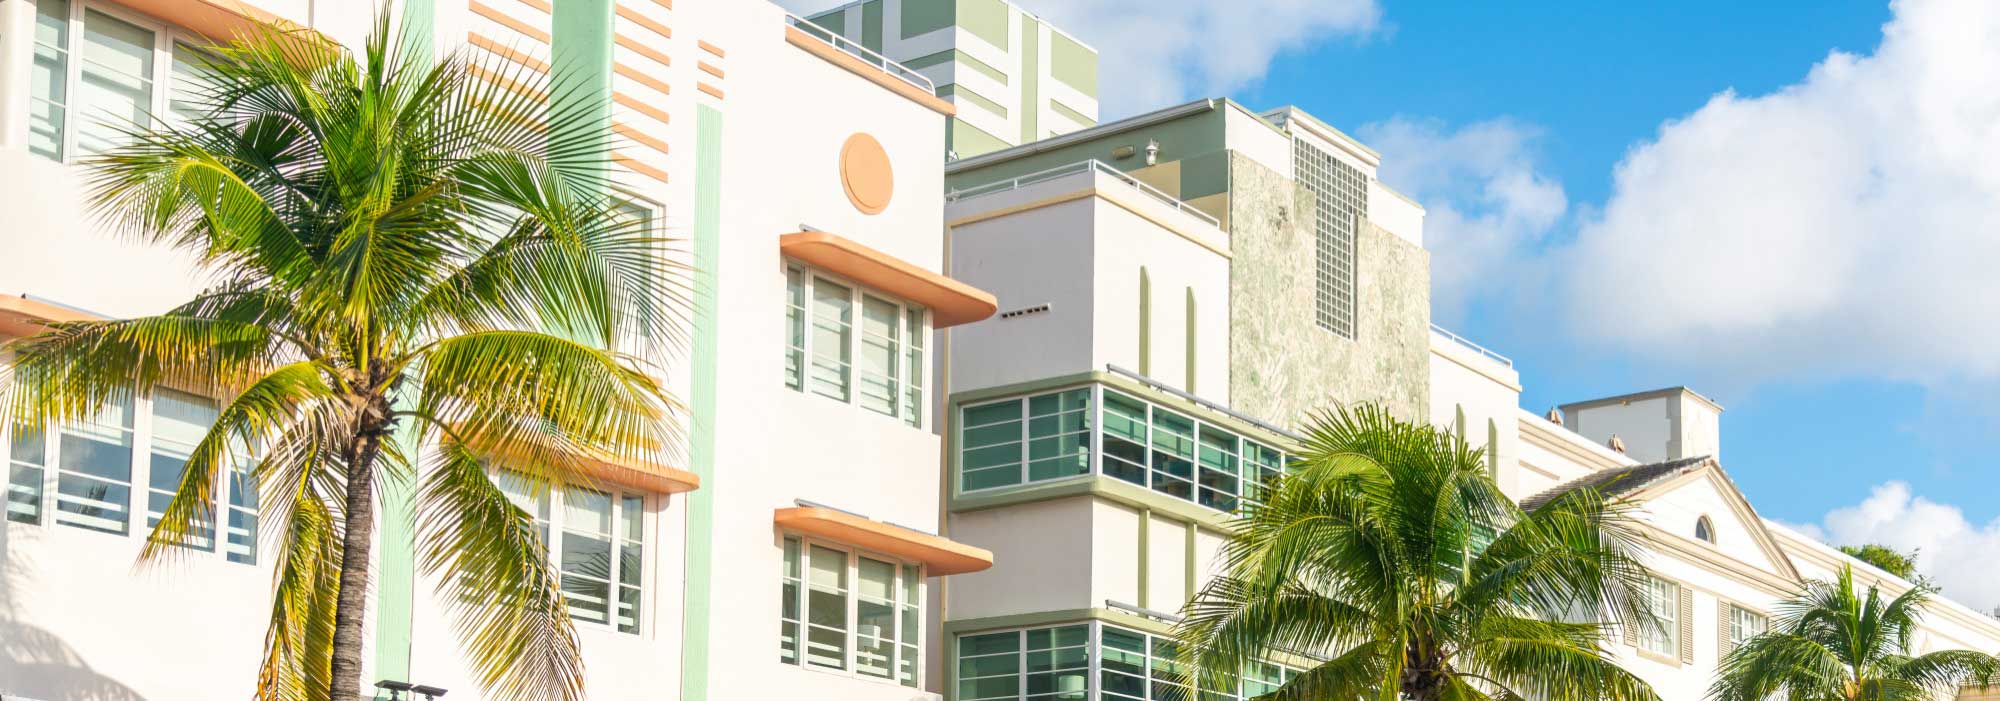 Art Deco Buildings - Miami Beach